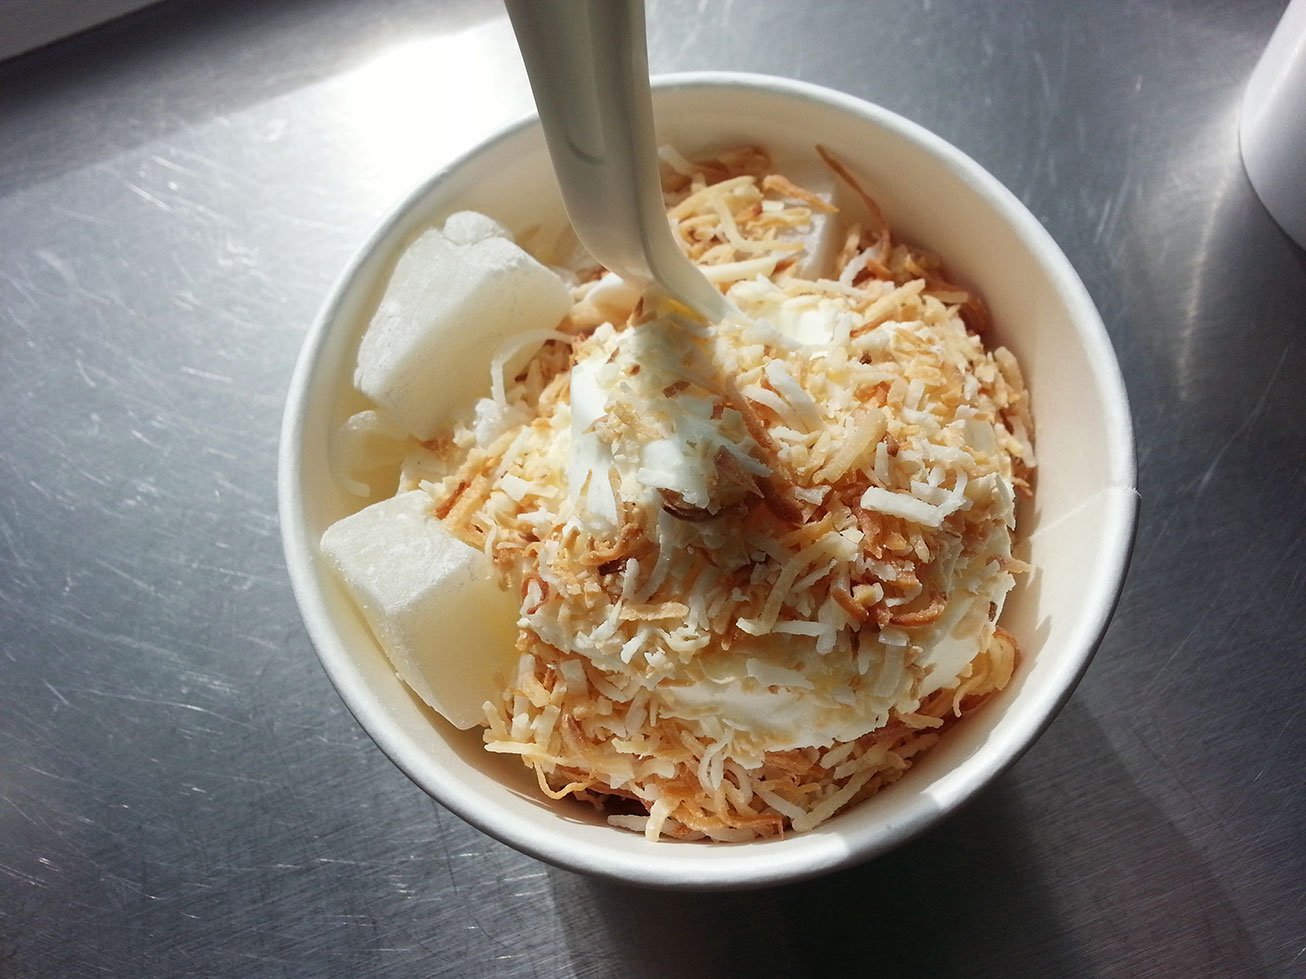 Plain Original Flavor Frozen Yogurt In Take Out Bowl With Compos